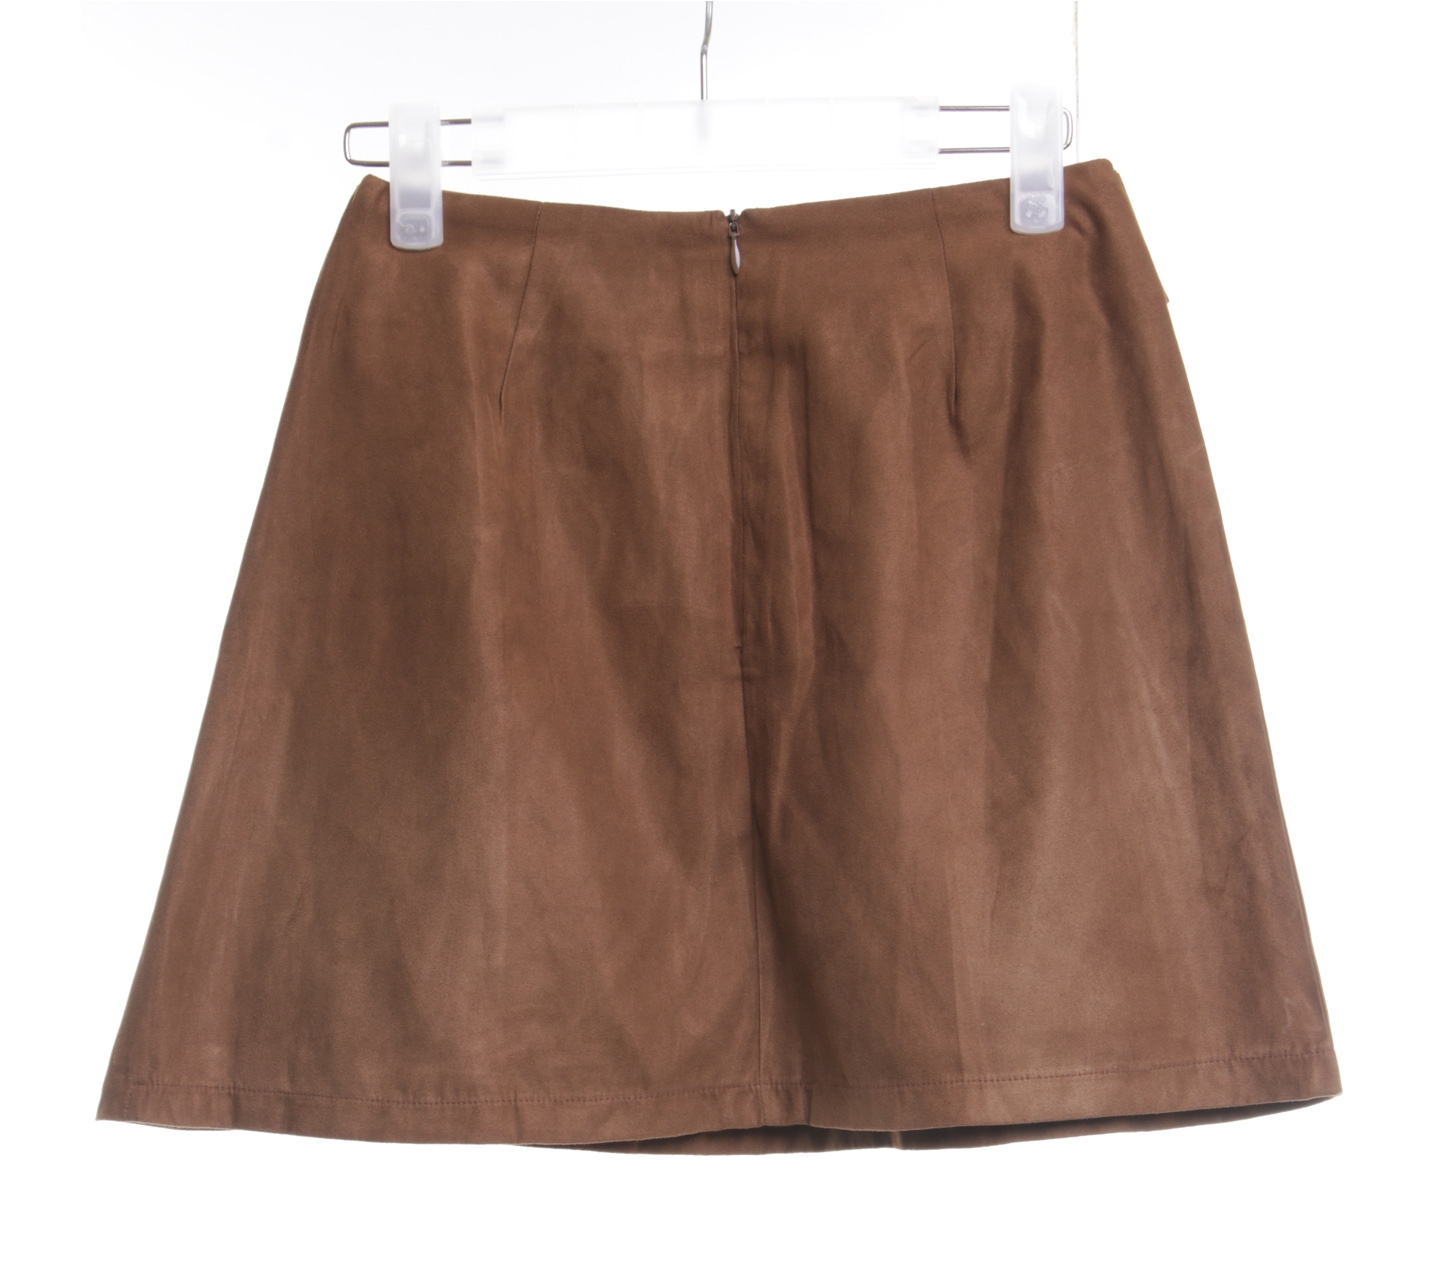 The Pixi Rock Brown Mini Skirt